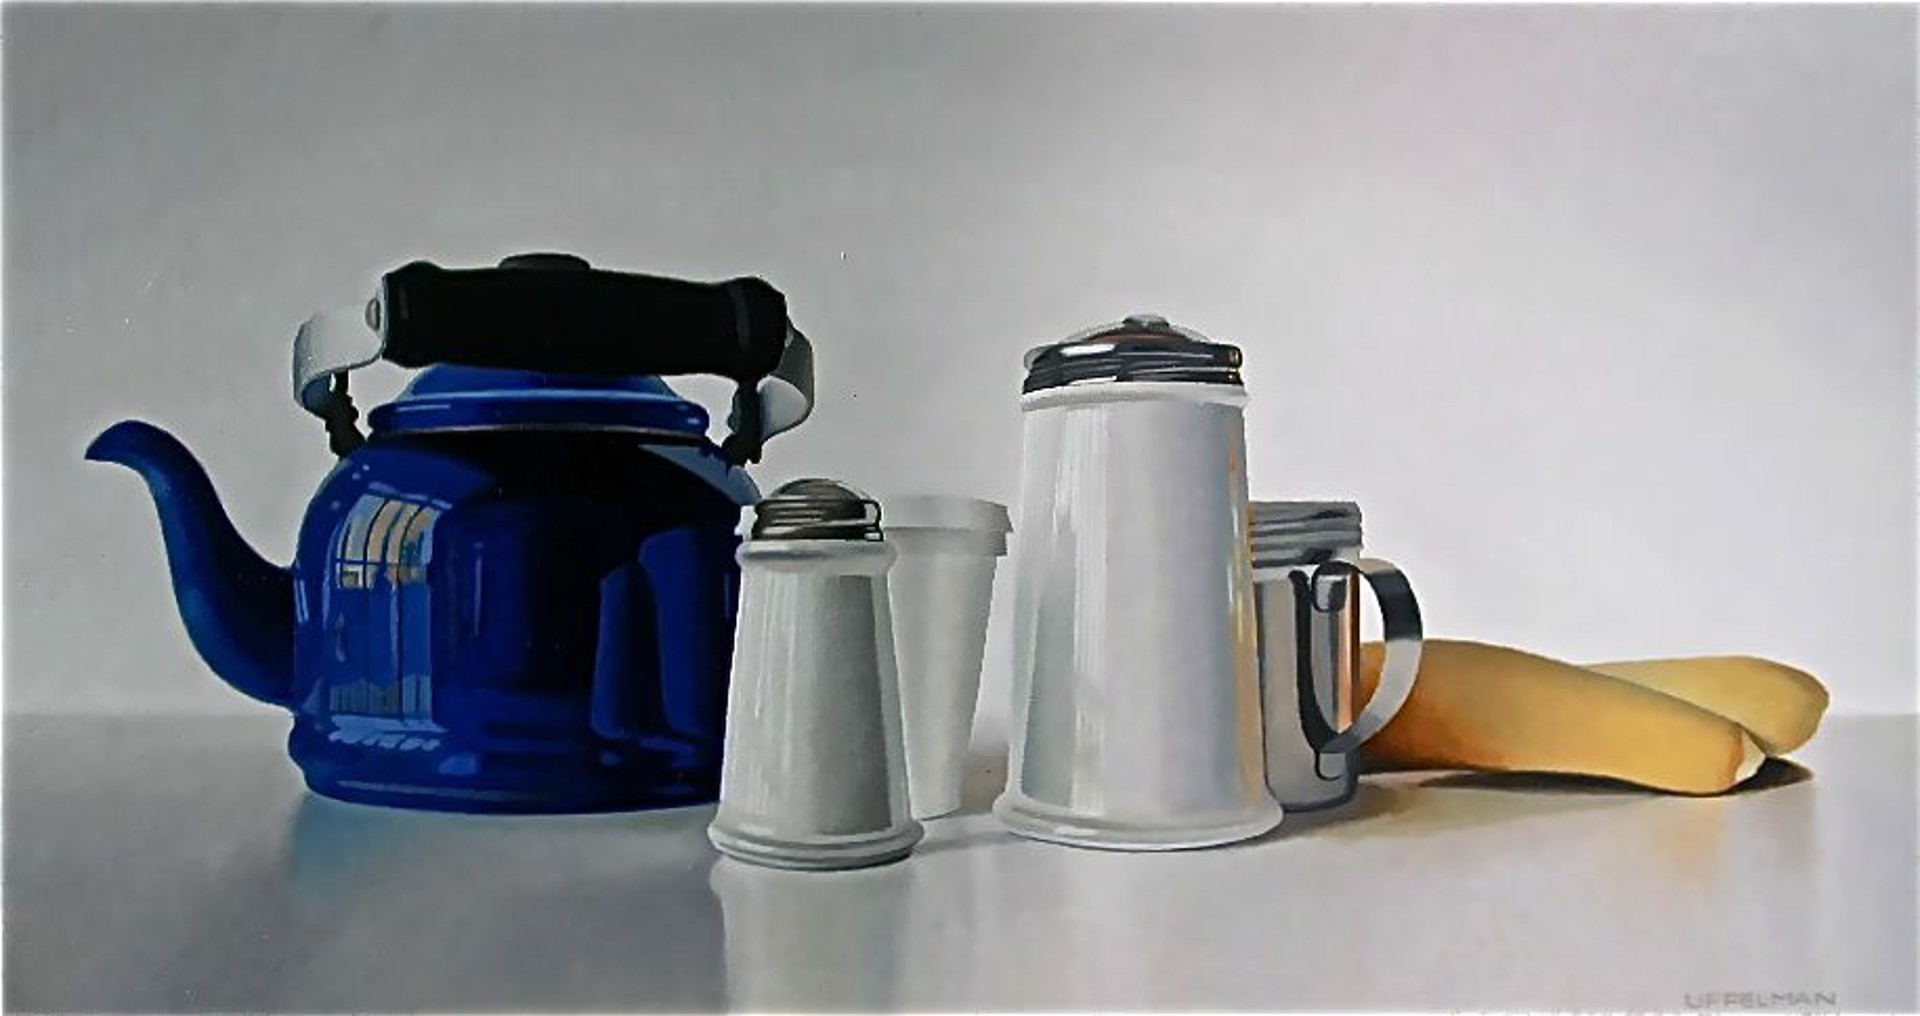 Blue Kettle and Shakers by Jeff Uffelman